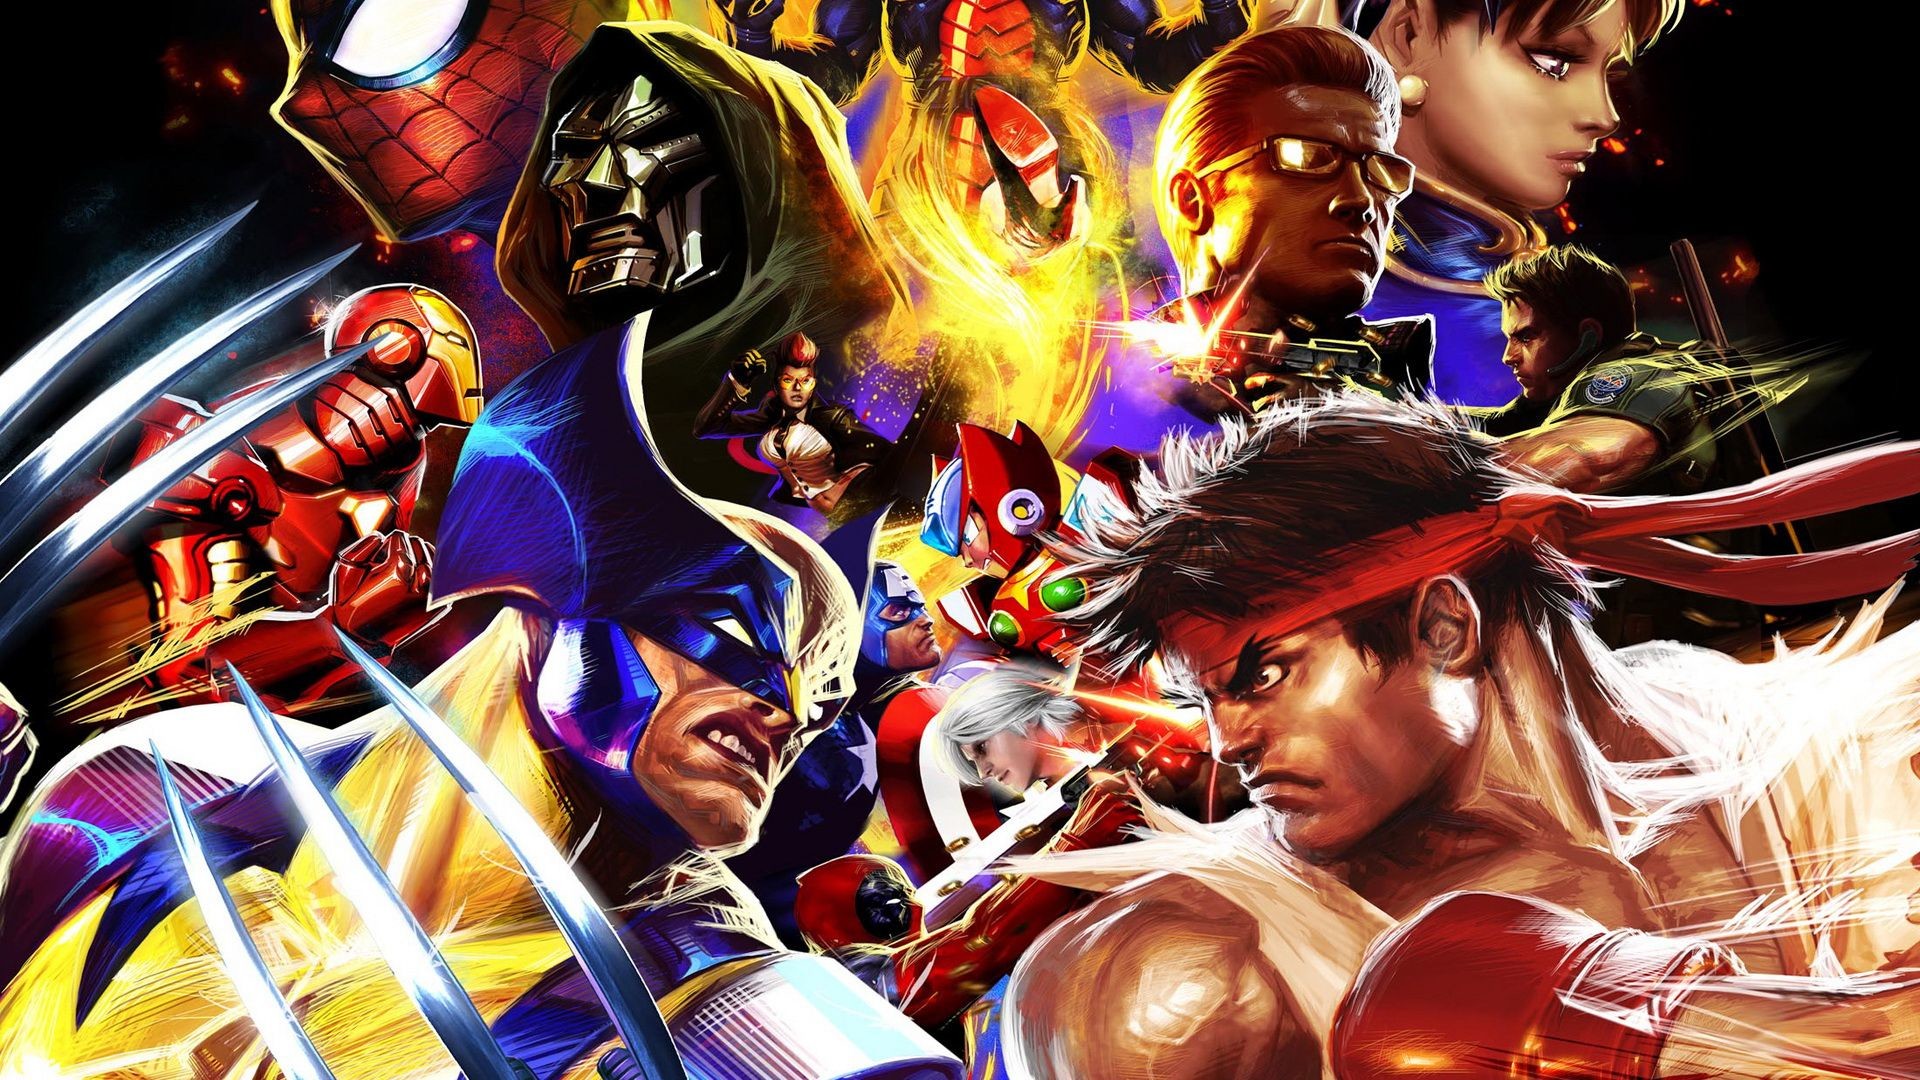 1920x1080 ICXM.net - Near-final Marvel vs. Capcom: Infinite roster appears .